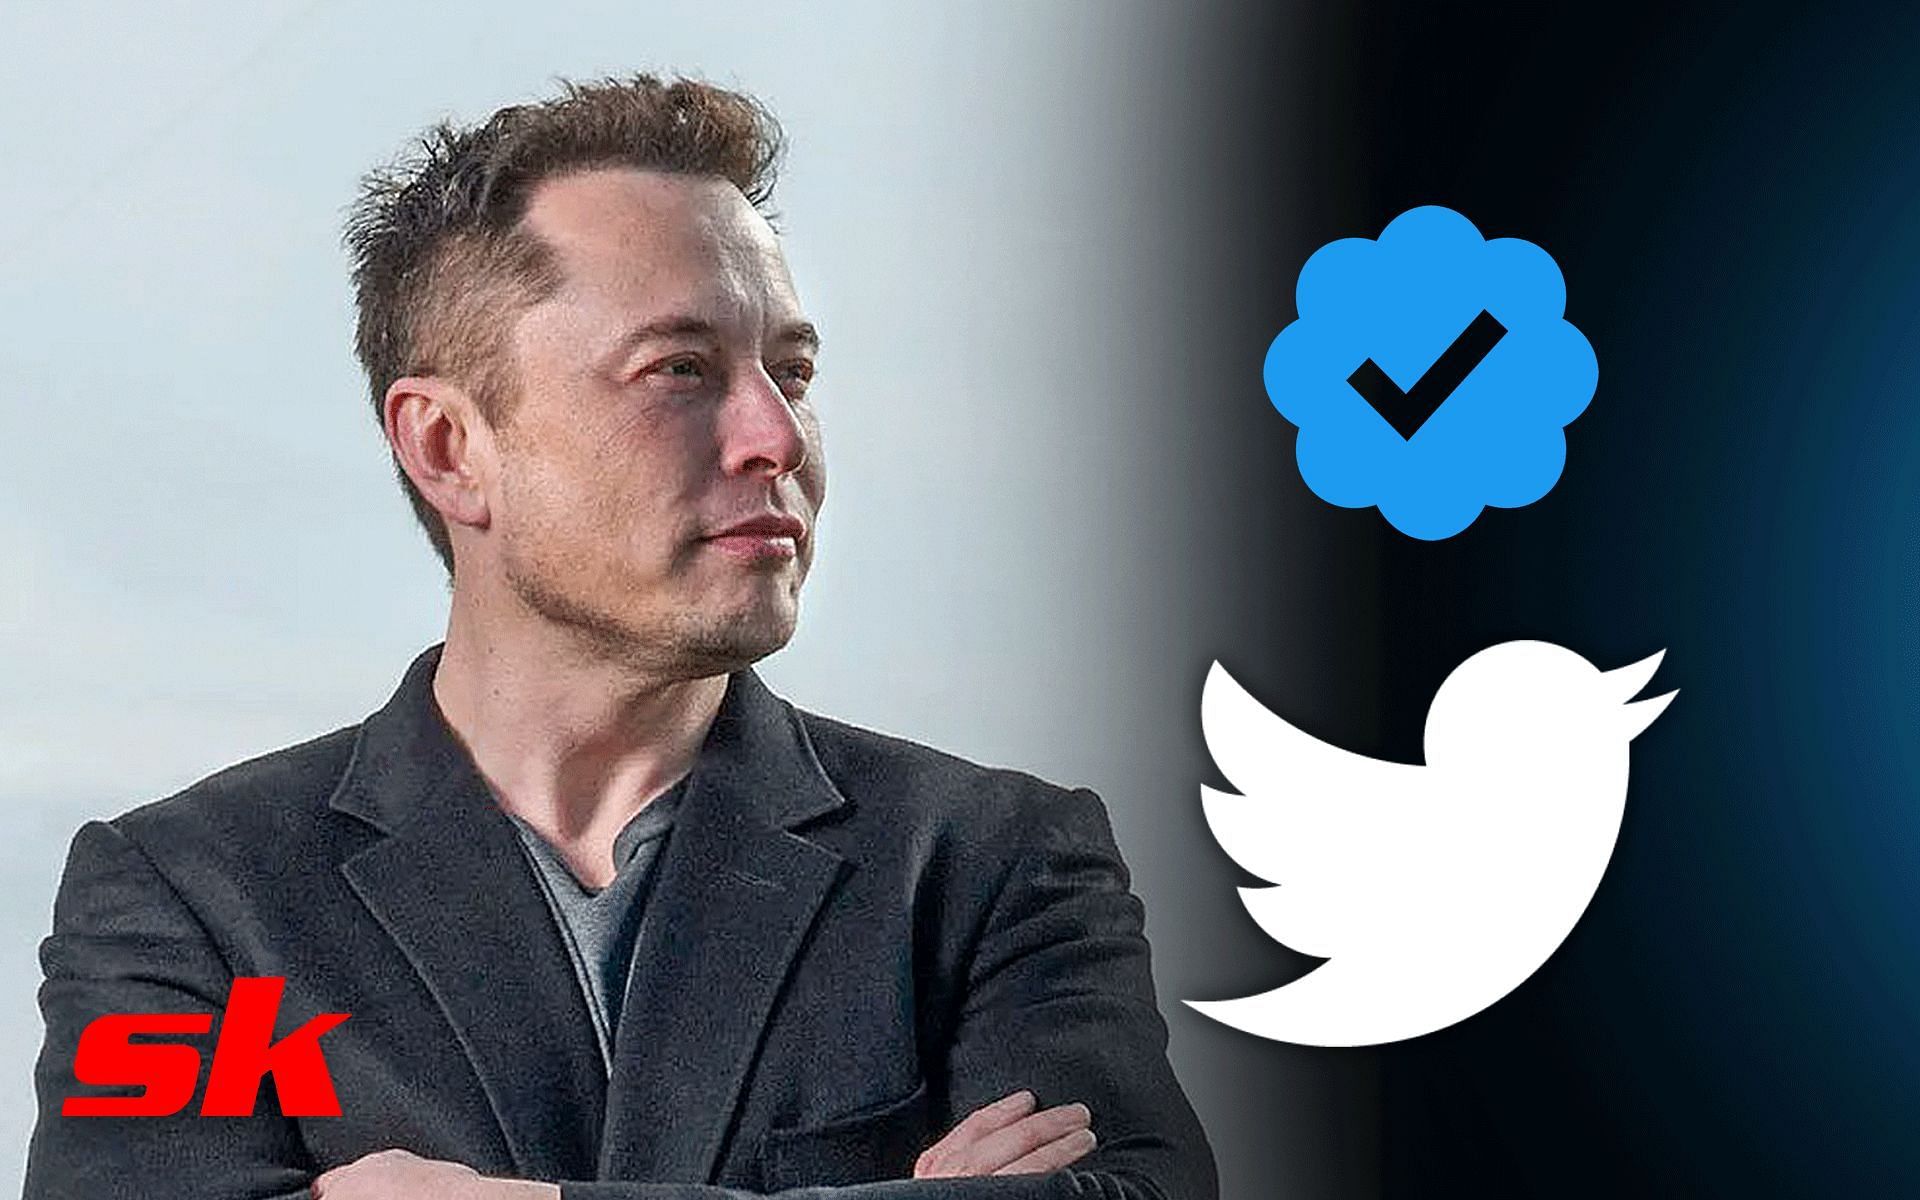 Elon Musk. [Images courtesy: Musk image from Twitter @SawyerMerritt, logo from Twitter, and blue tick image from Twitter @DavidTYork]